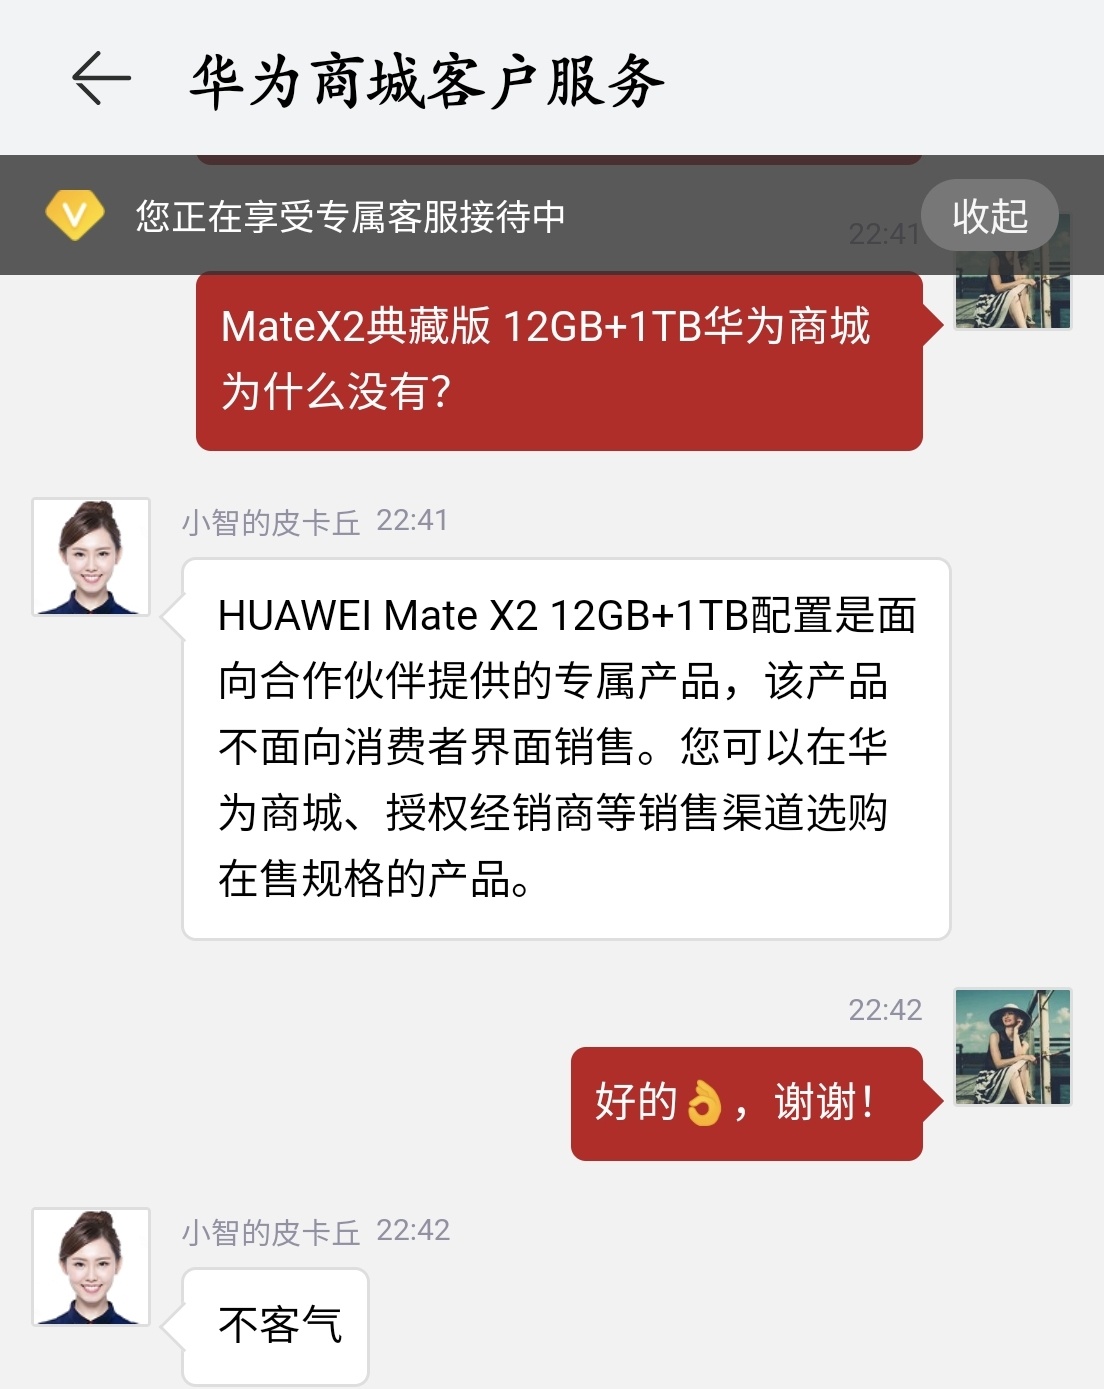 Huawei Mate X2 top 12GB RAM